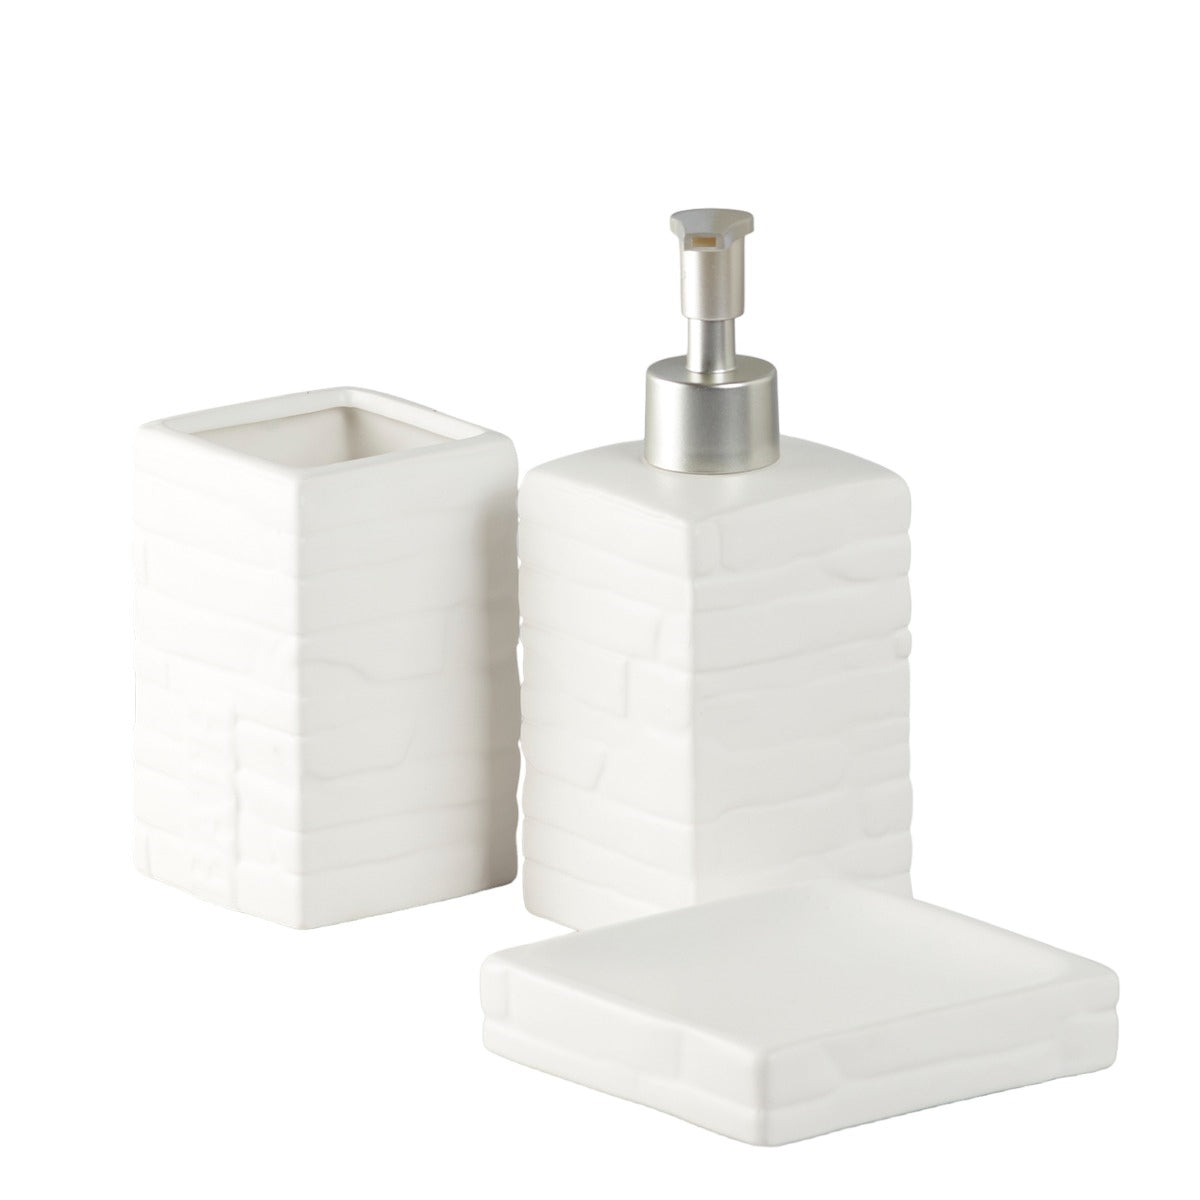 Ceramic Bathroom Accessories Set of 3 Bath Set with Soap Dispenser (9869)